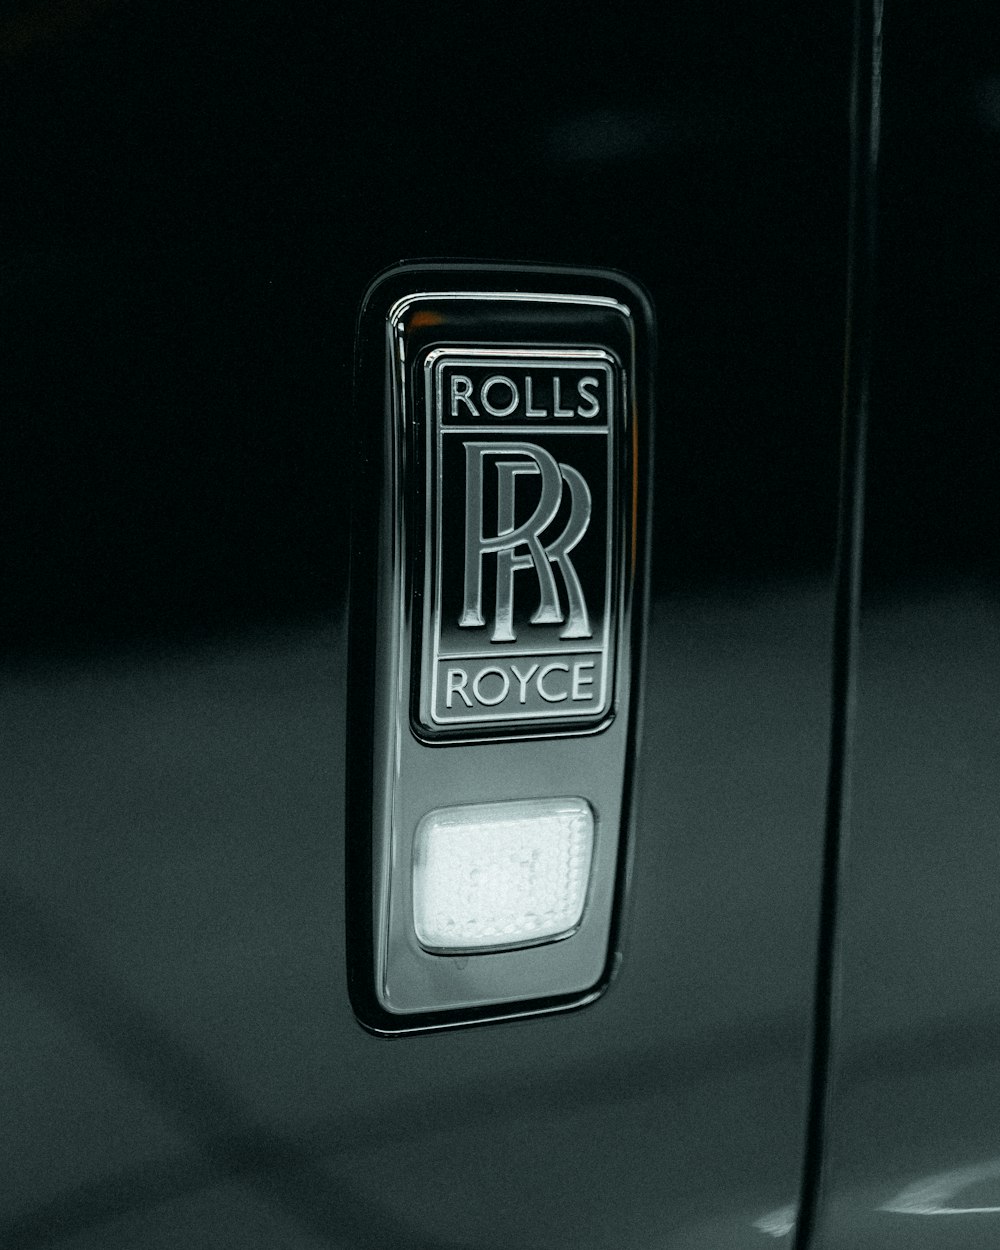 a rolls royce emblem on the door of a rolls royce car